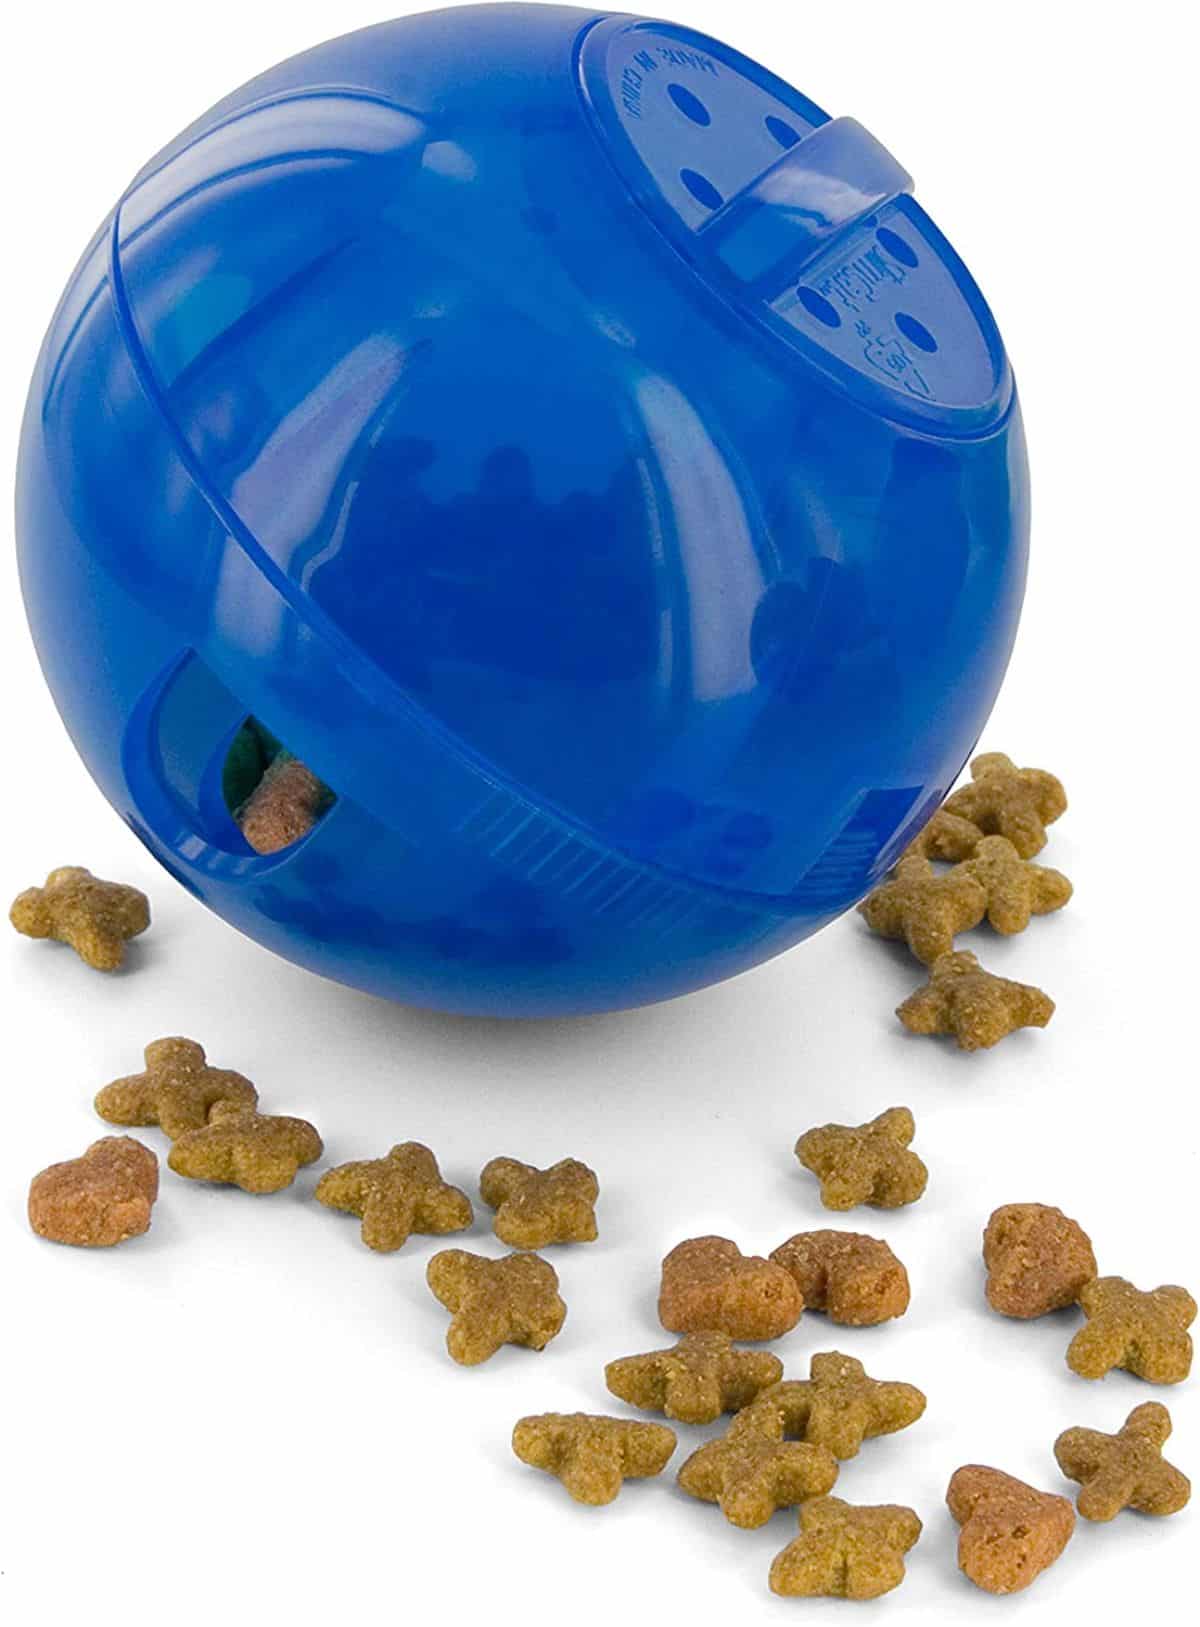 A Ball Full of Treats cat toy.